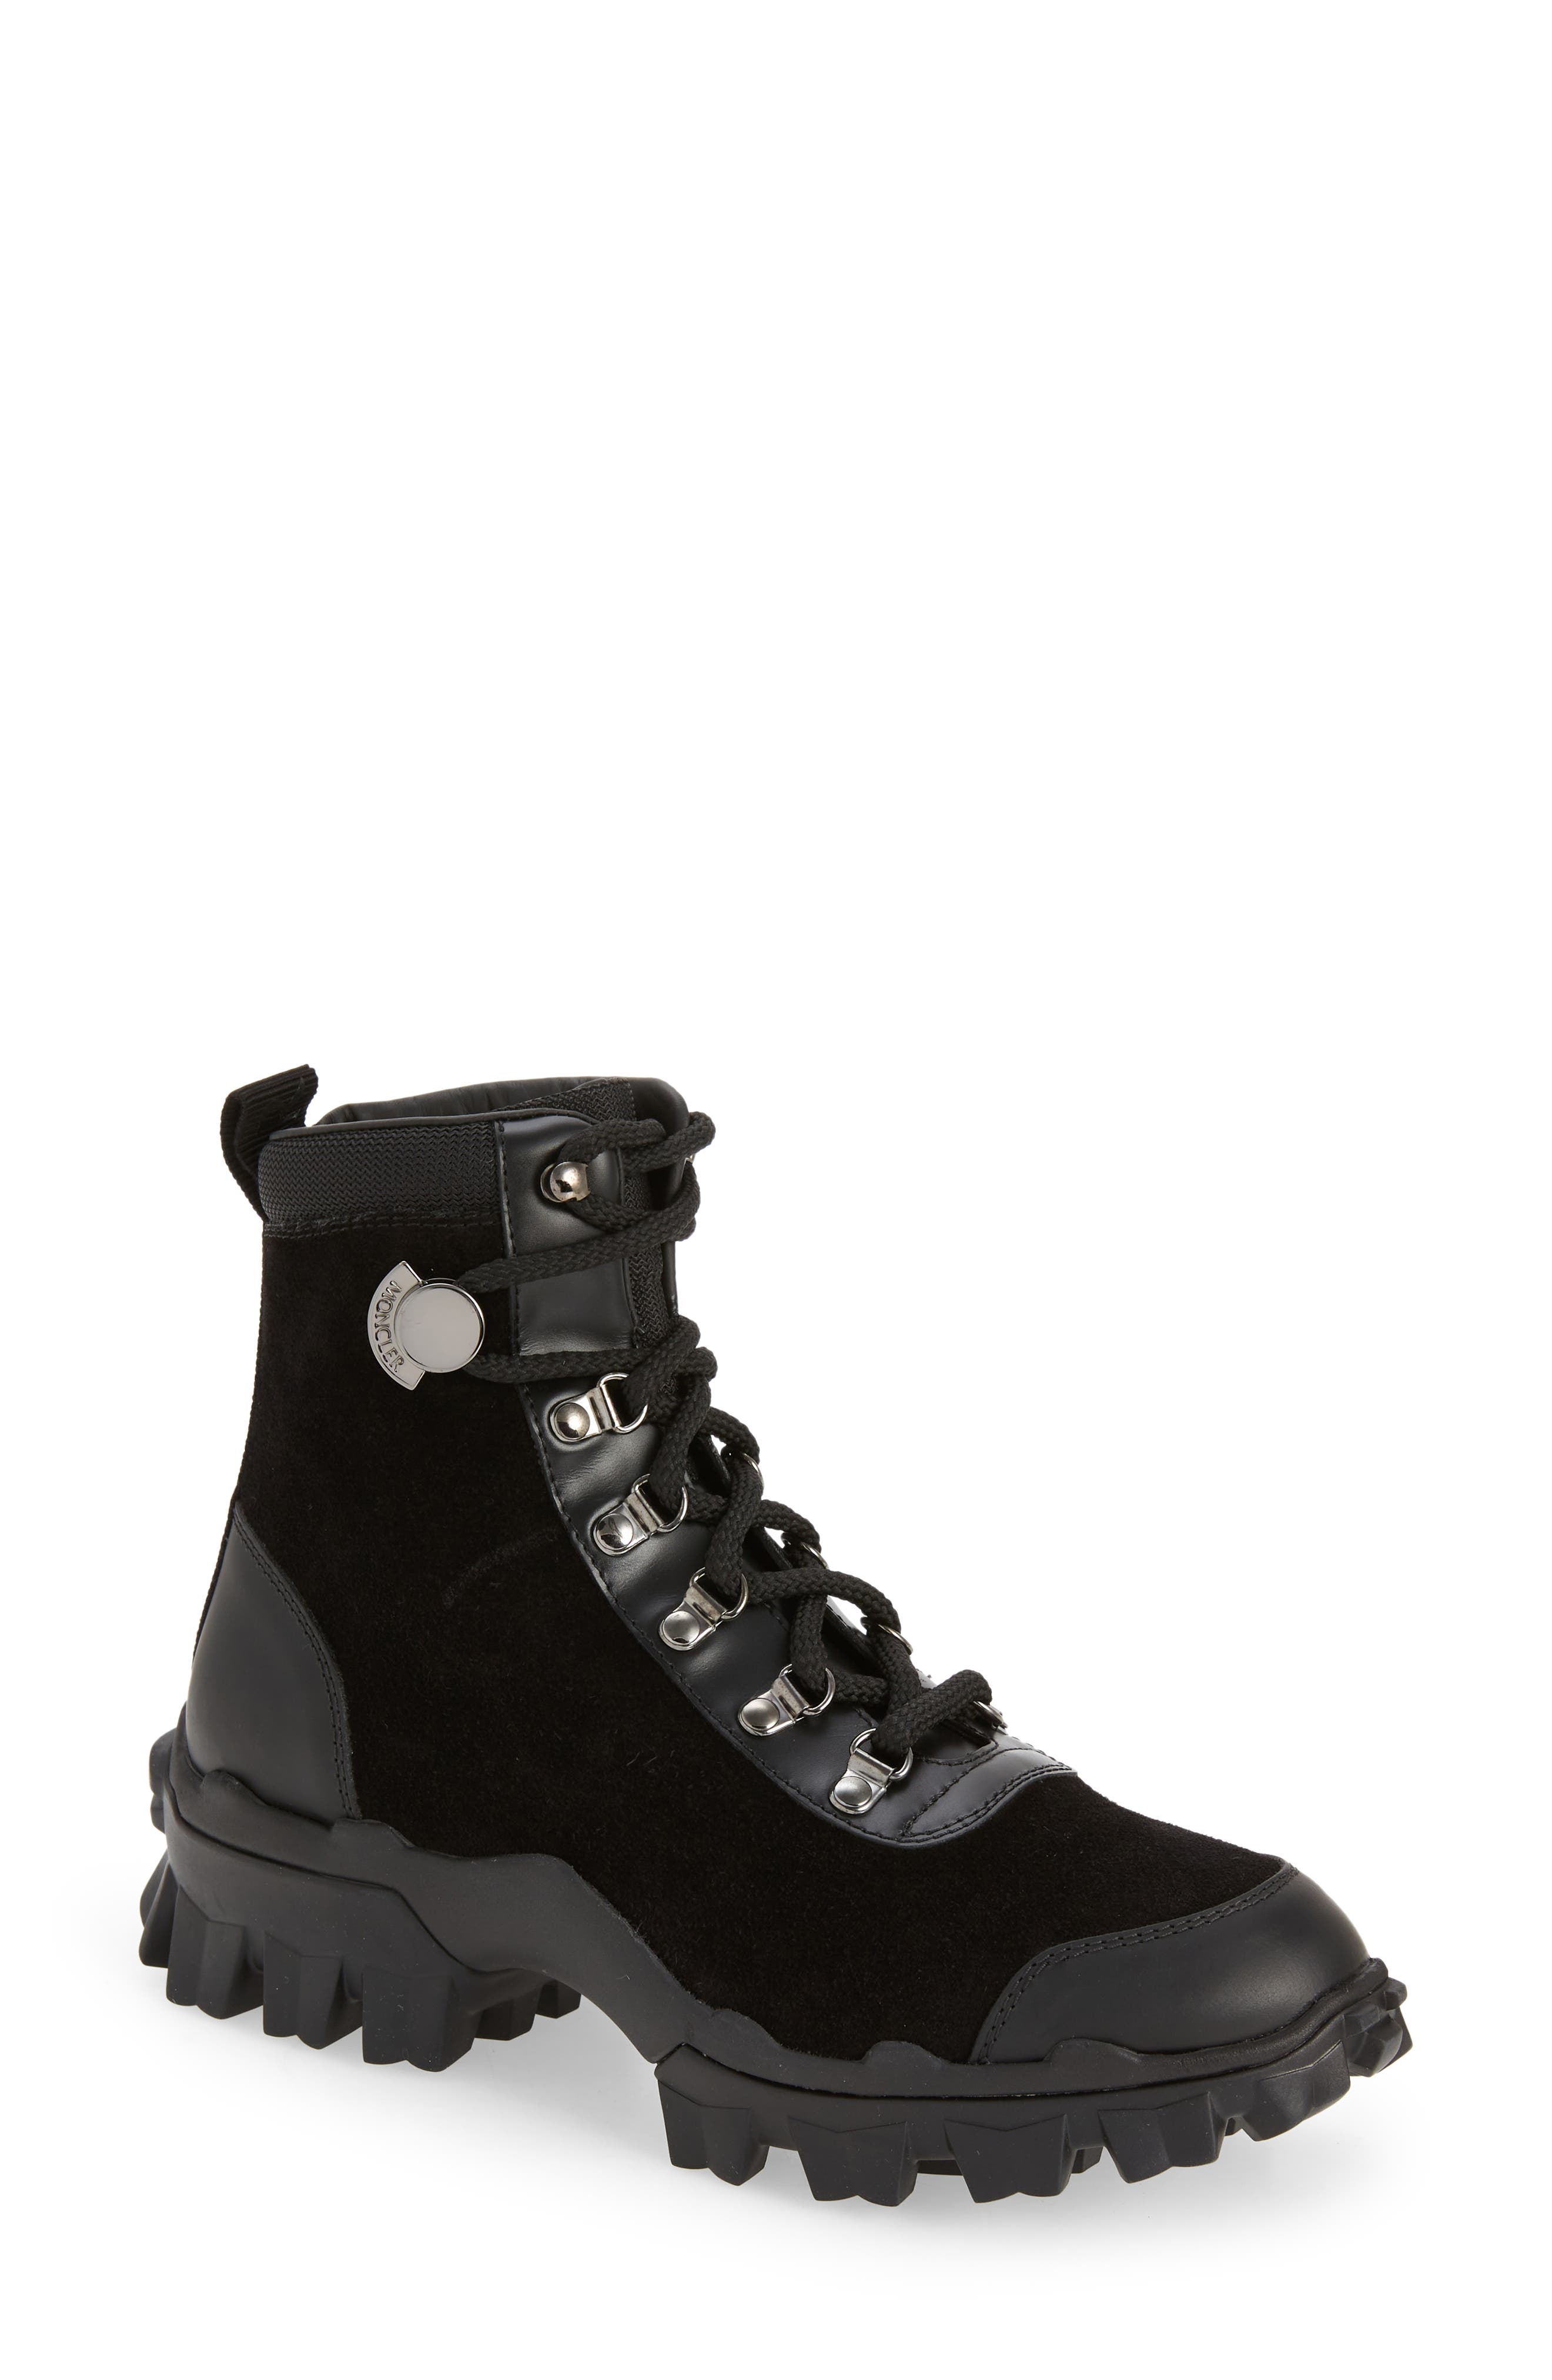 moncler walking boots Off 72% - www.loverethymno.com